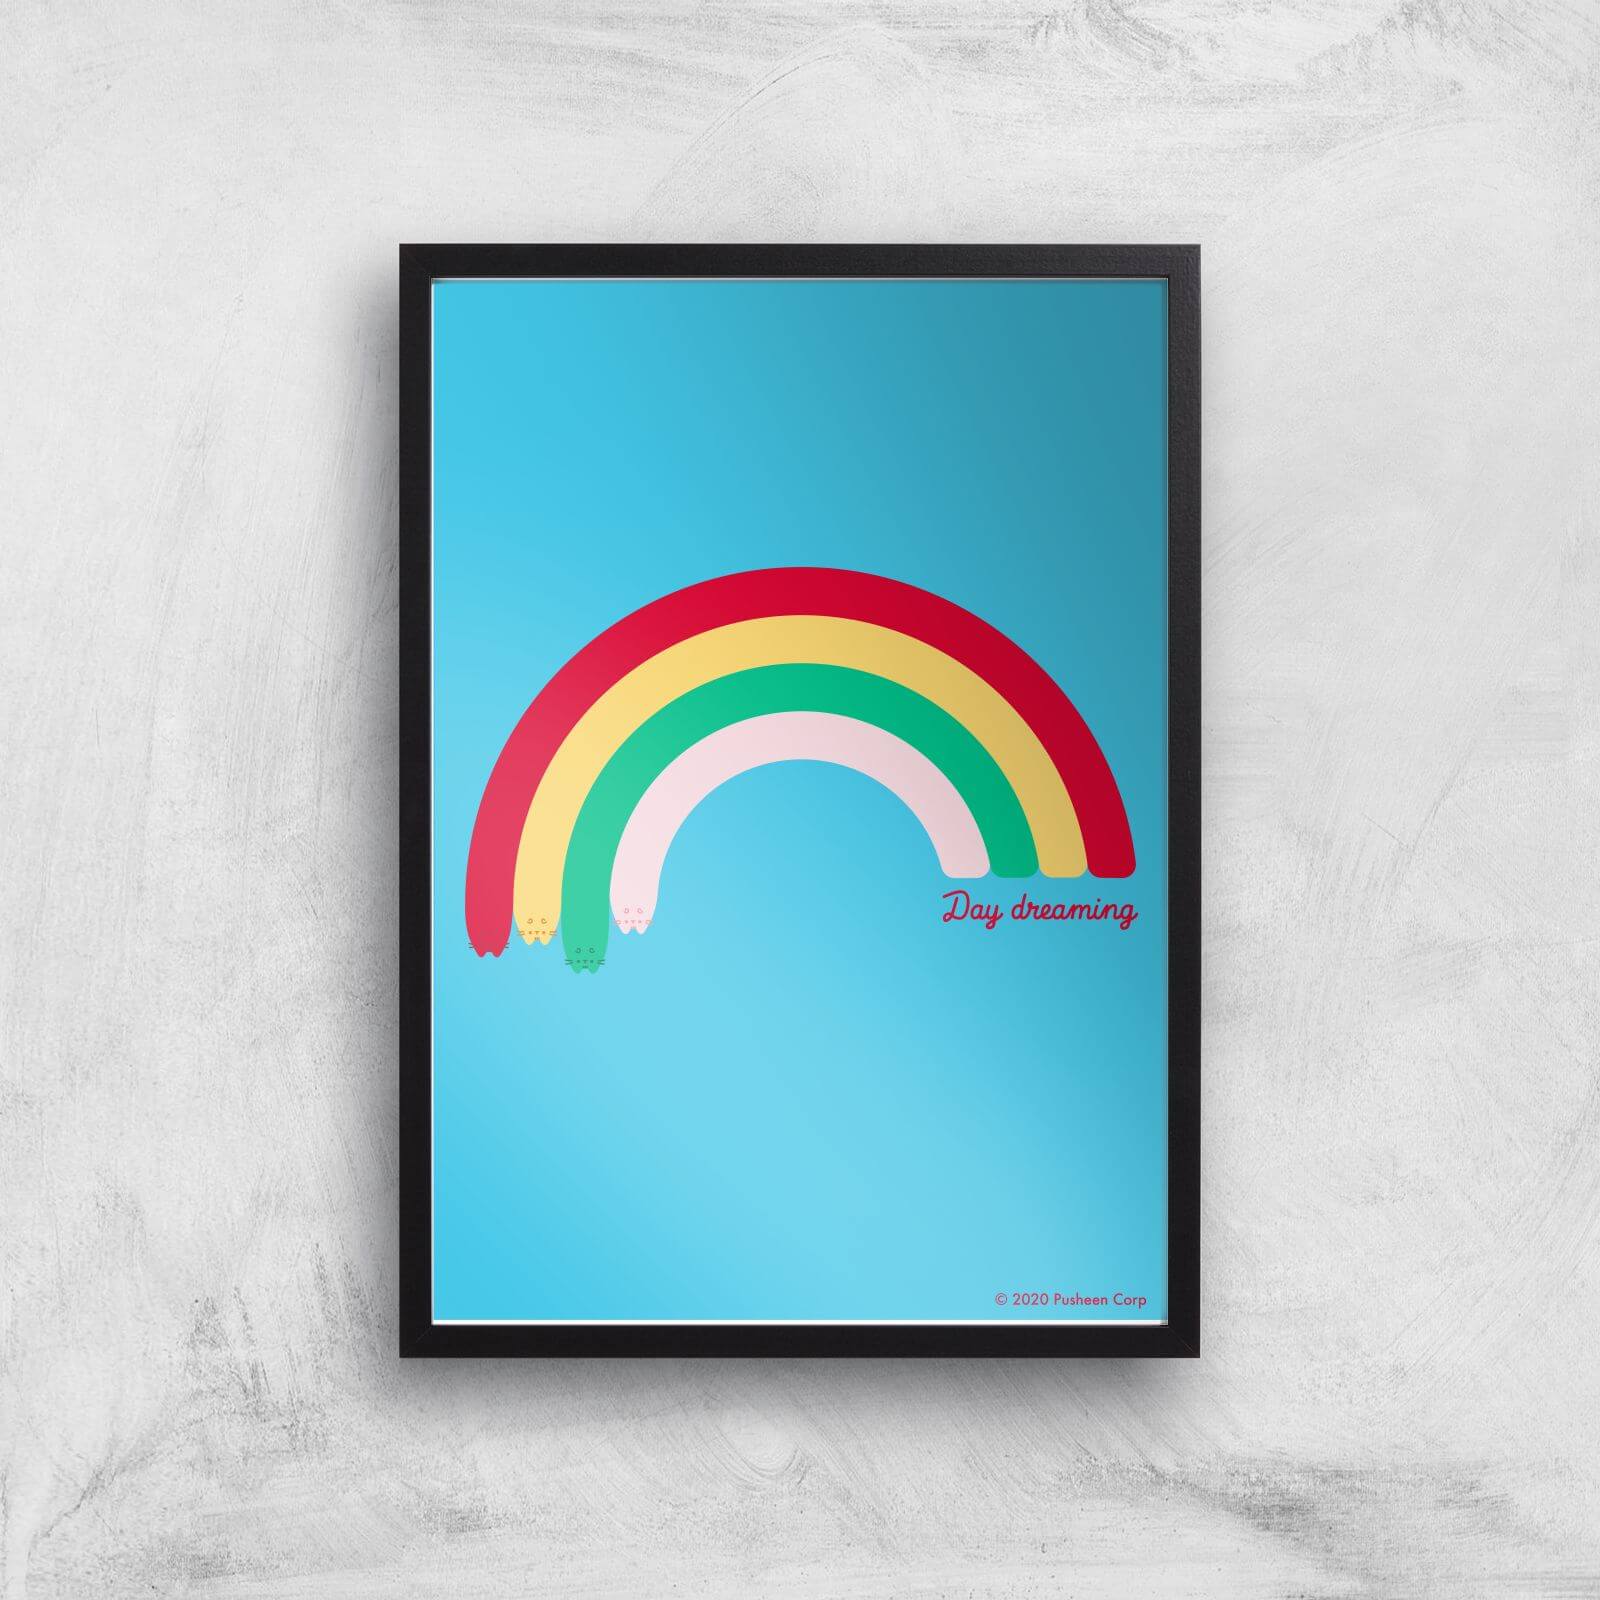 Pusheen Large Rainbow Giclee Art Print - A2 - Black Frame